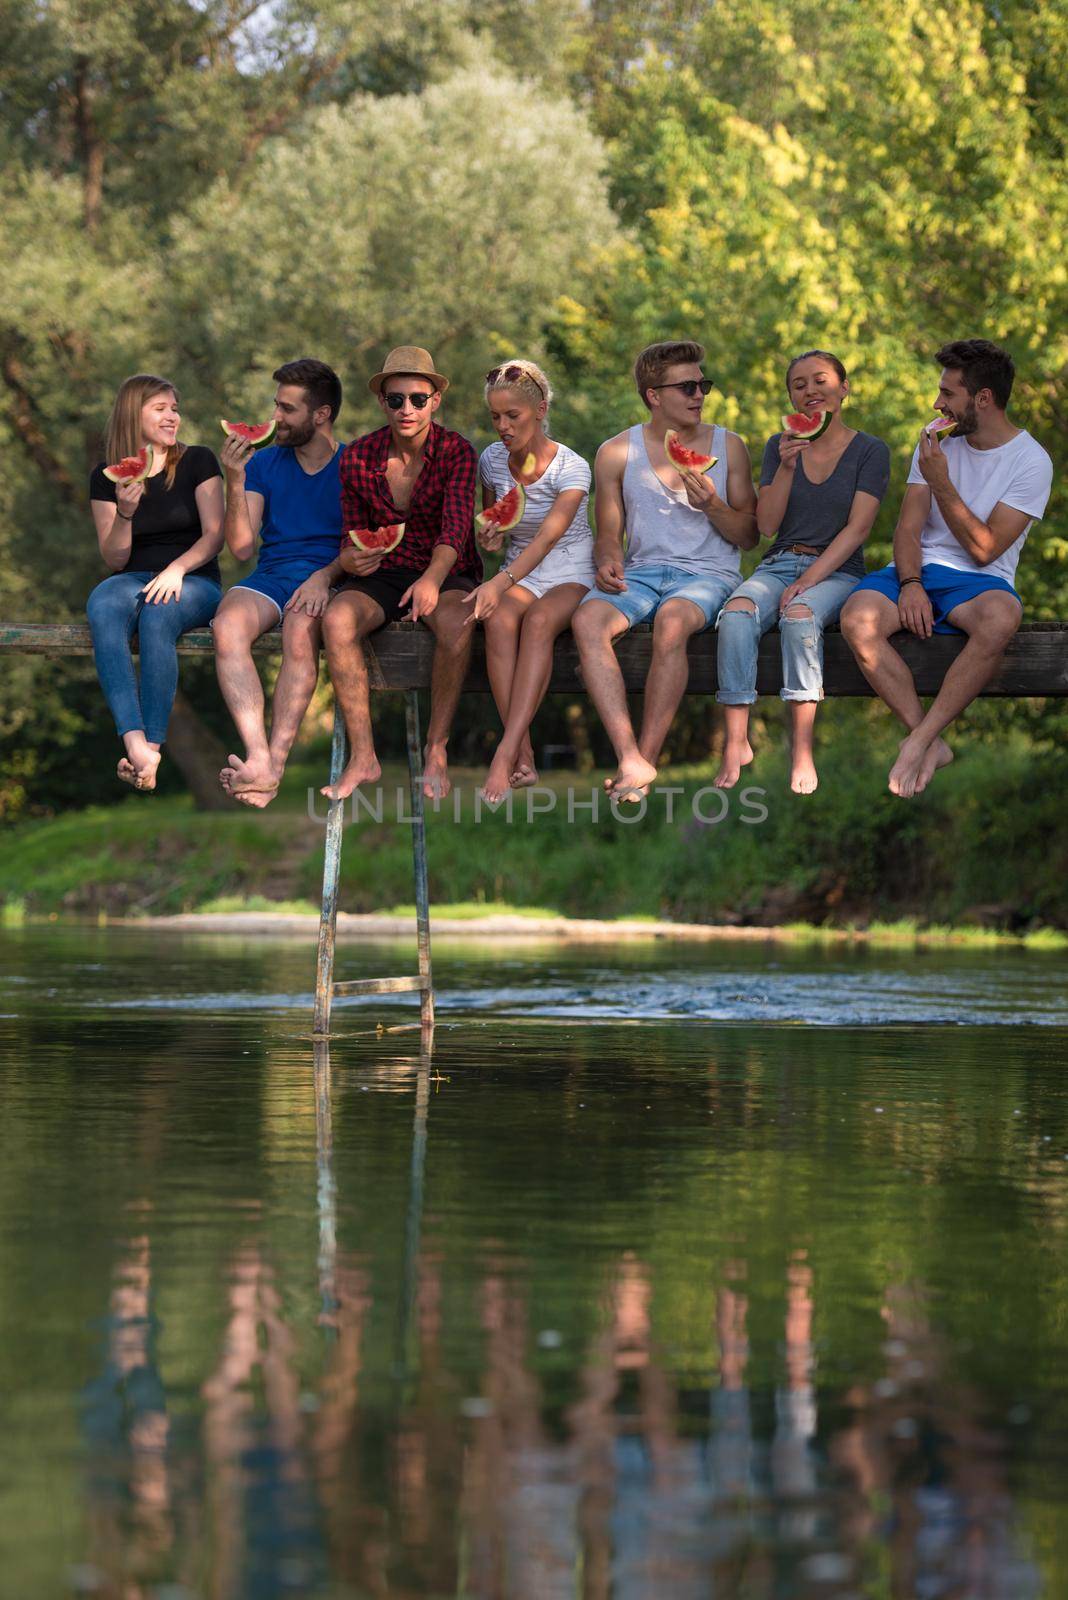 friends enjoying watermelon while sitting on the wooden bridge by dotshock